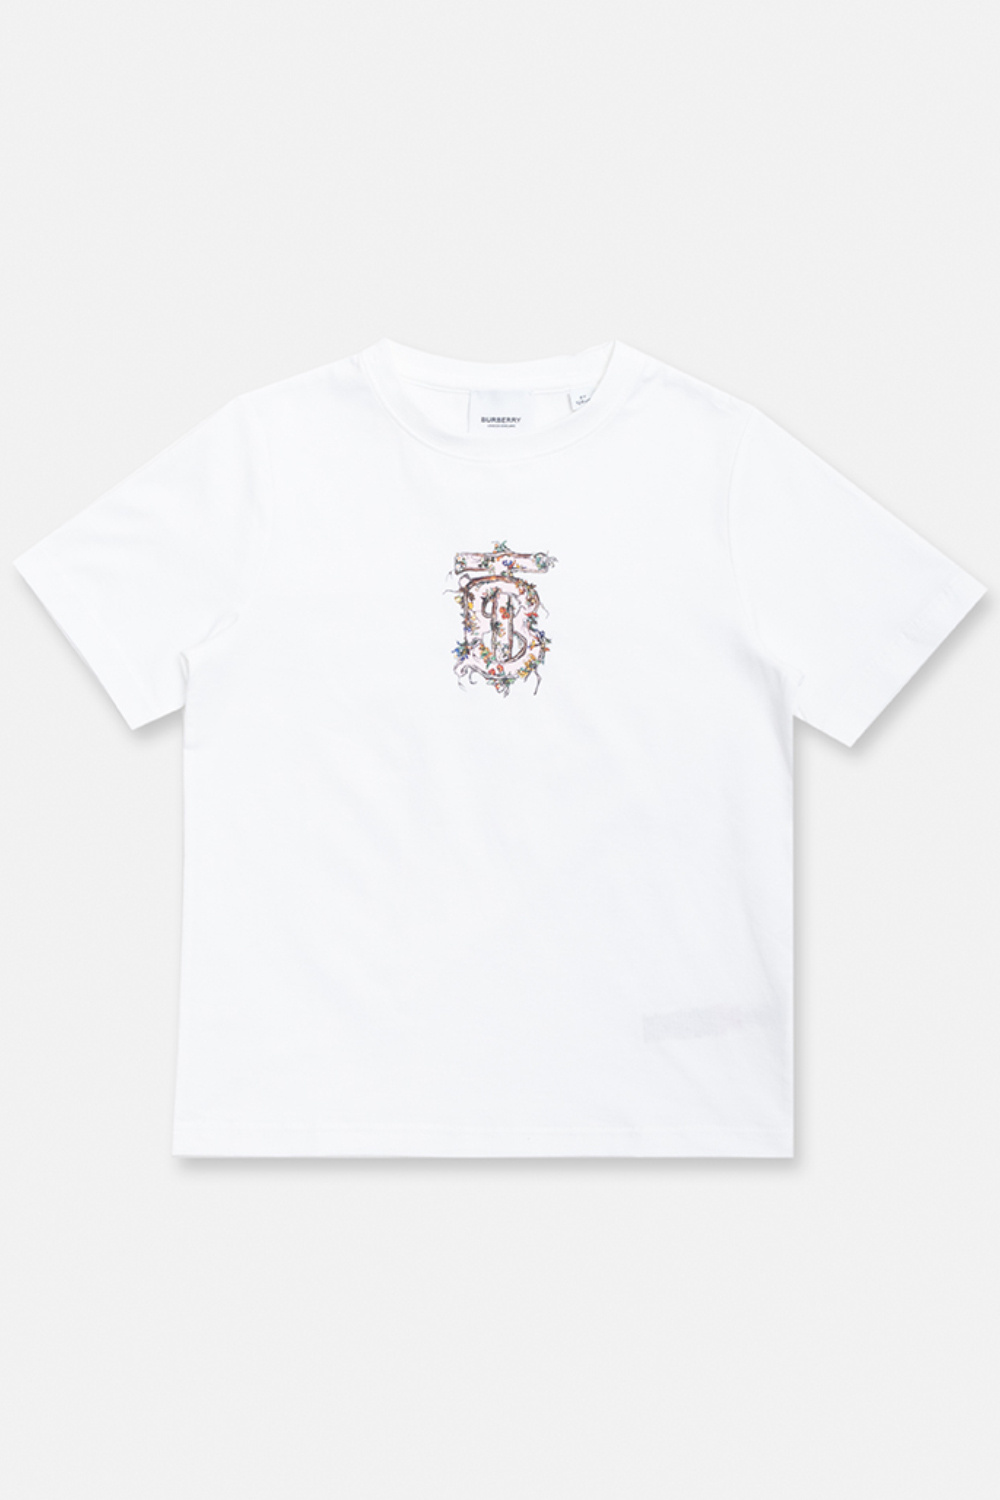 burberry Sneaker Kids ‘Alba’ T-shirt with logo